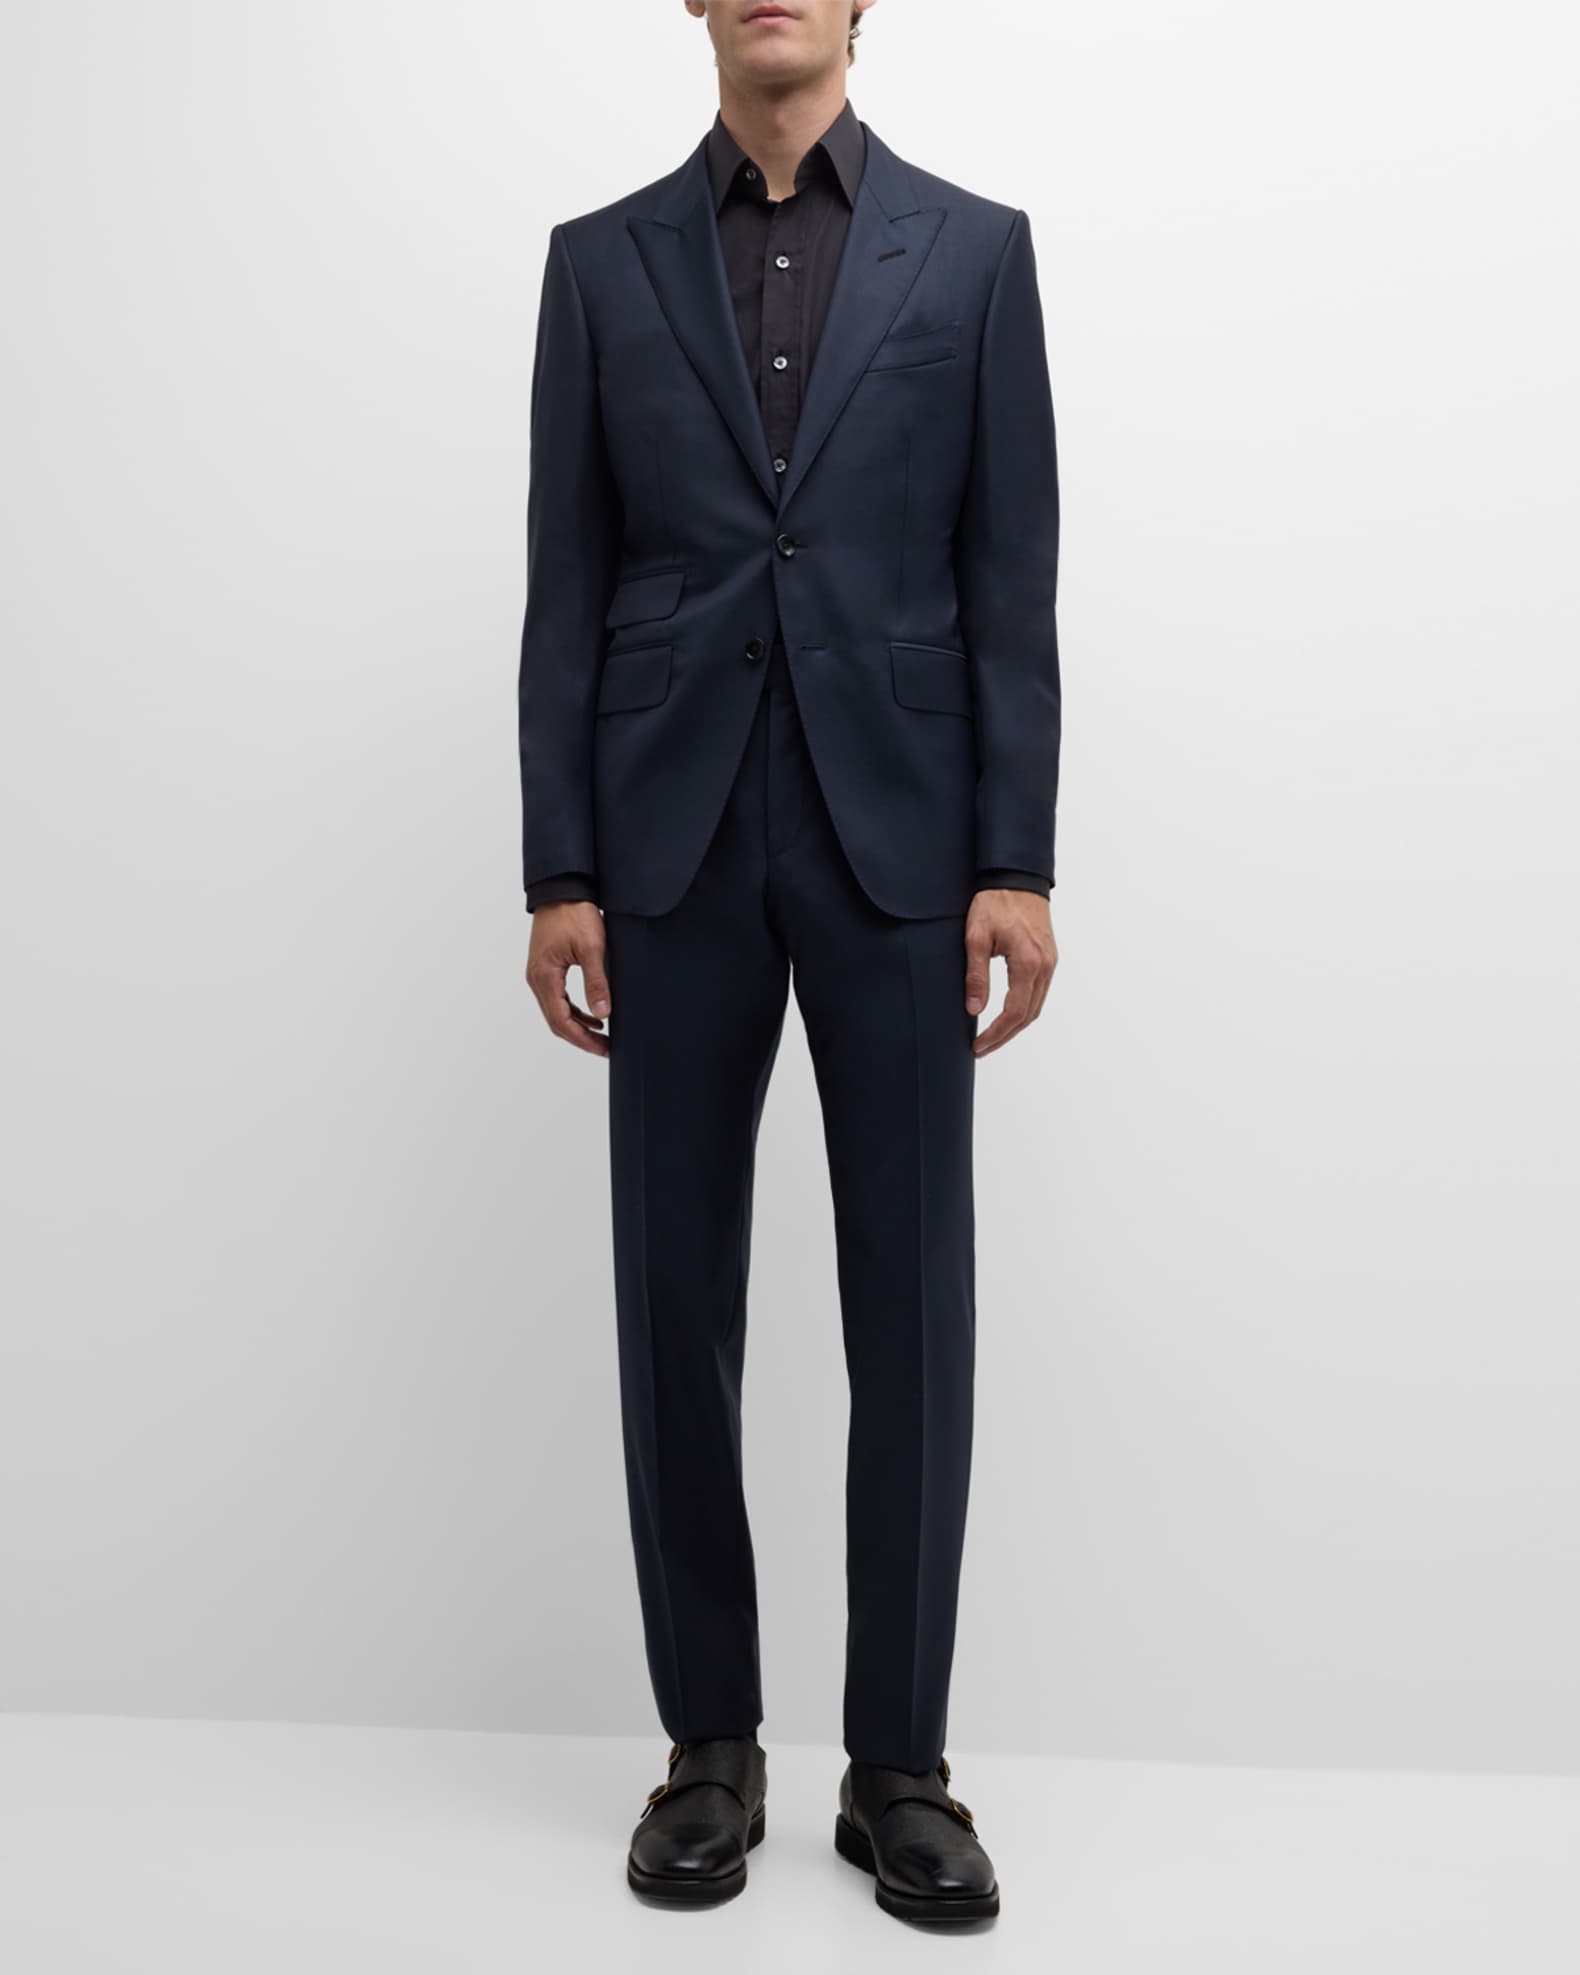 TOM FORD Men's Modern Fit Sharkskin Suit | Neiman Marcus